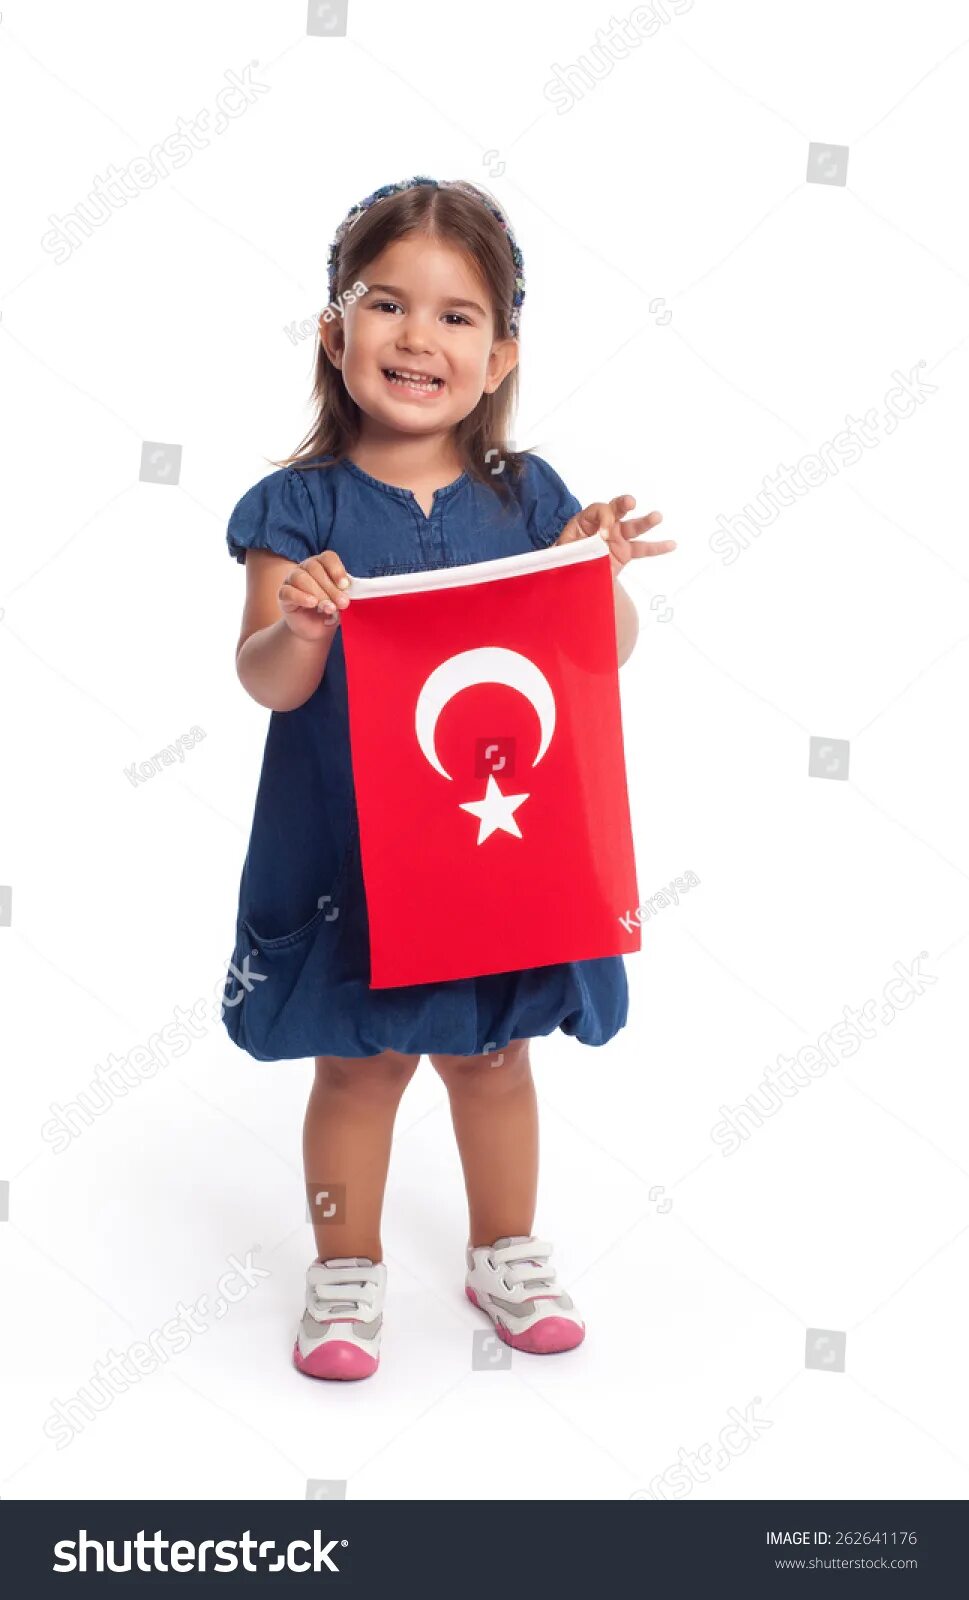 Держитесь на турецком. Ребенок с турецким флагом. Флаг Турции дети. Девочка с турецким флагом. Девочка держит флаг Турции.